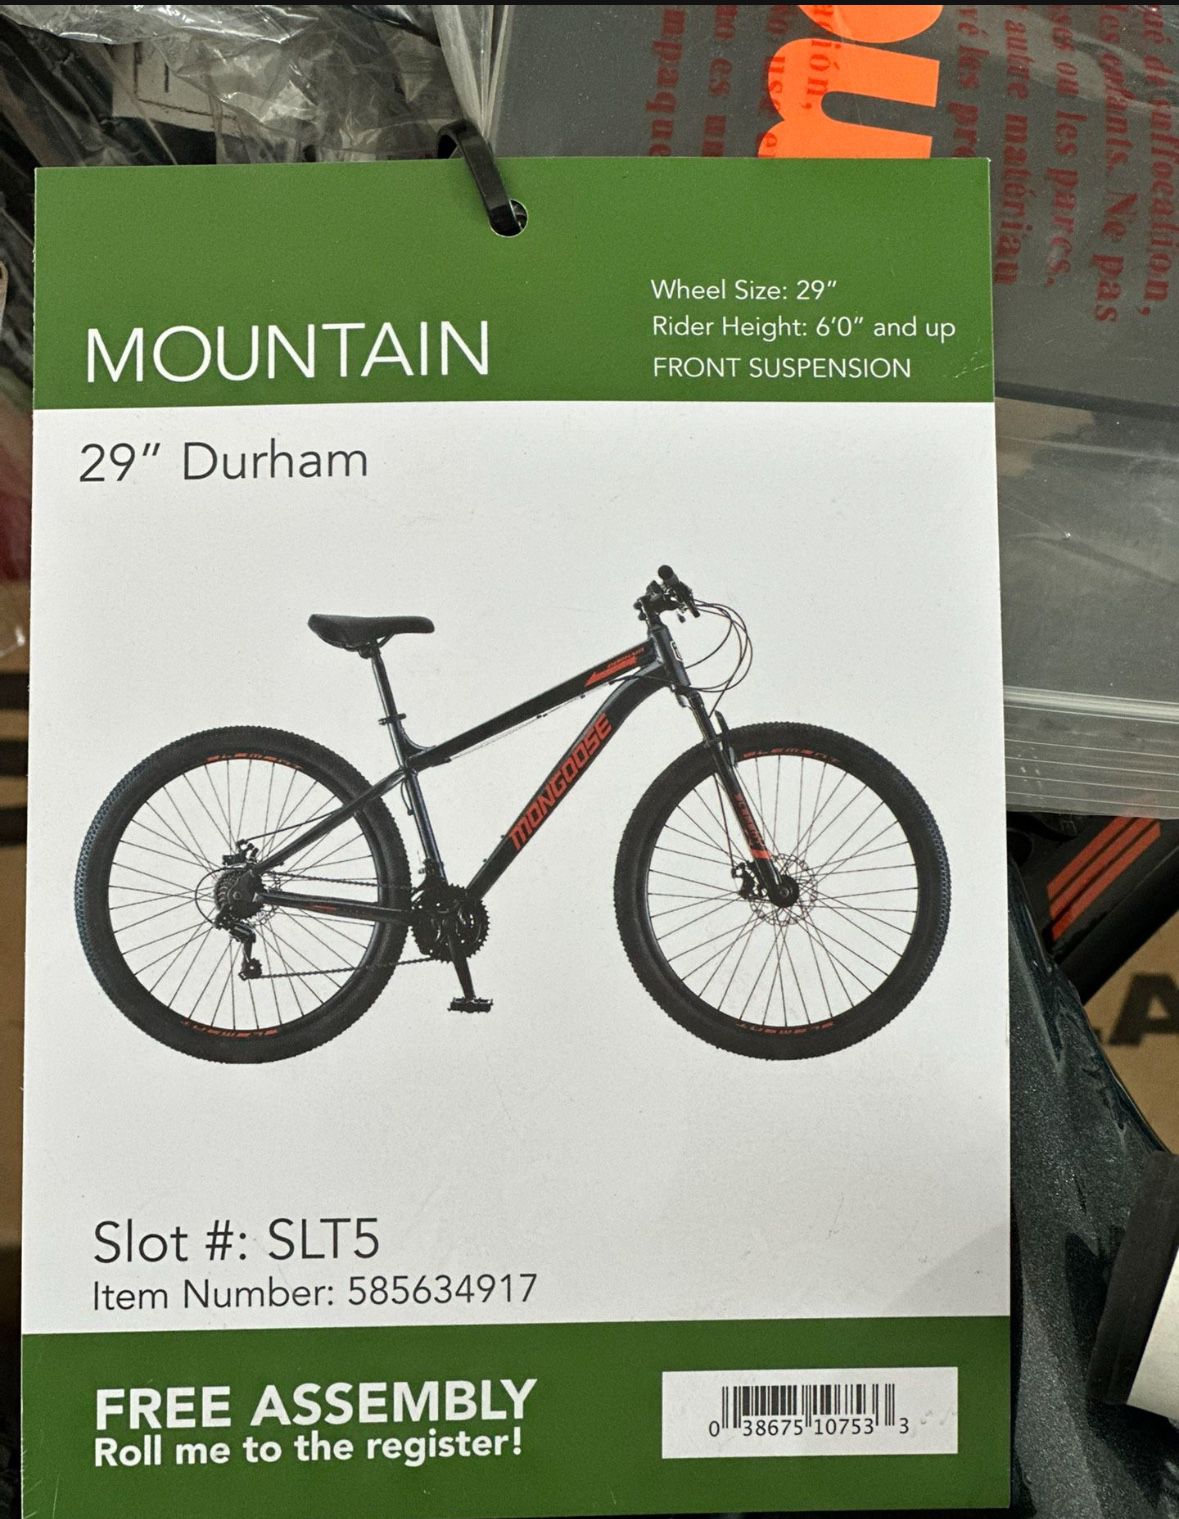 Mountain bike